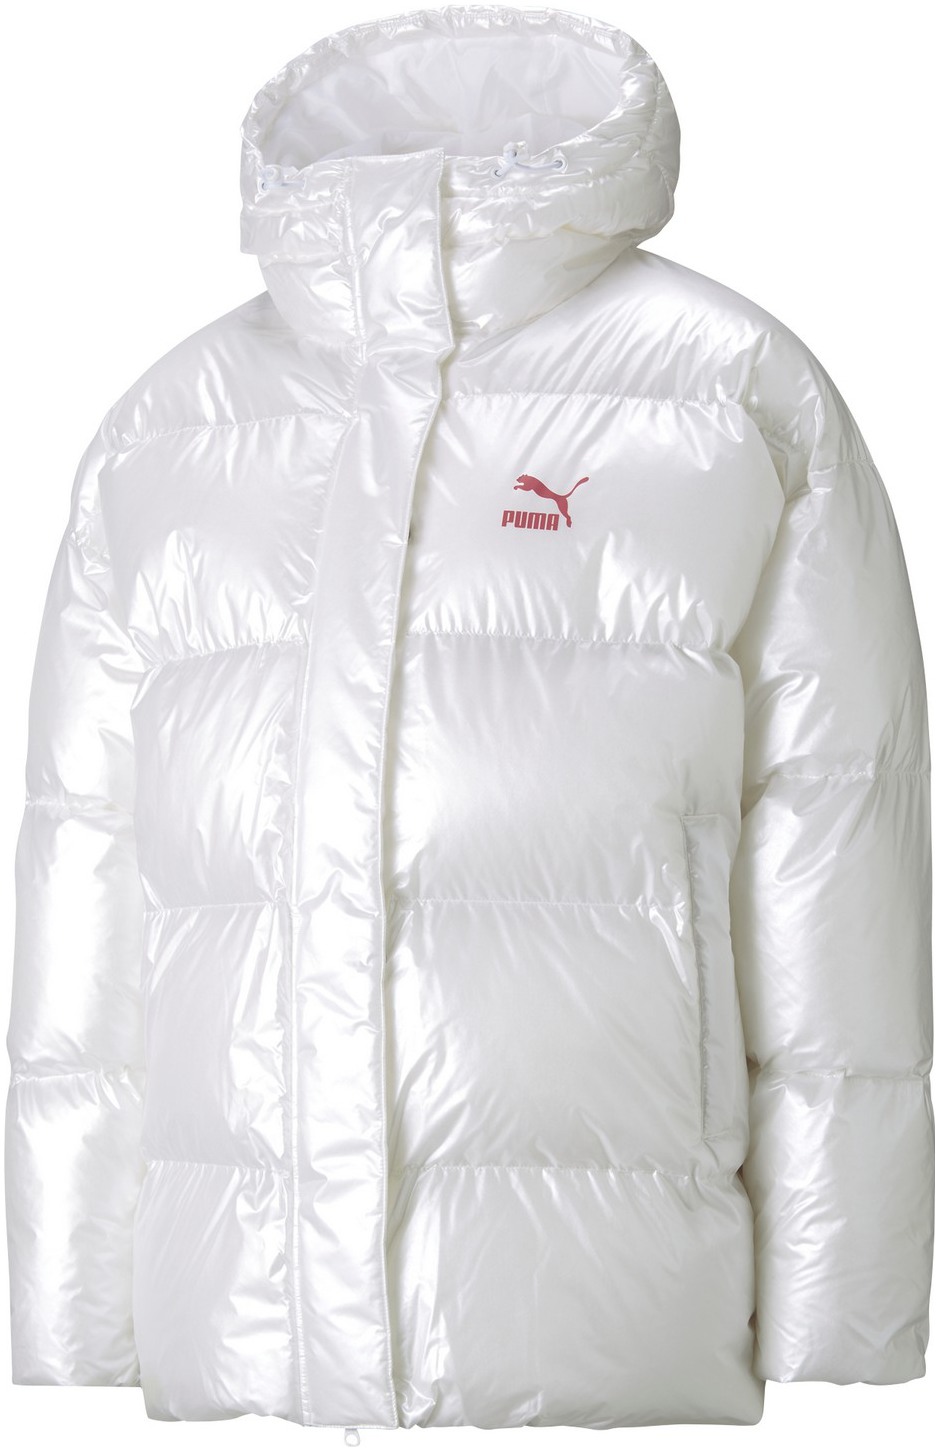 Womens winter jacket Puma JACKET | OVERSIZED W AD CLASSICS white